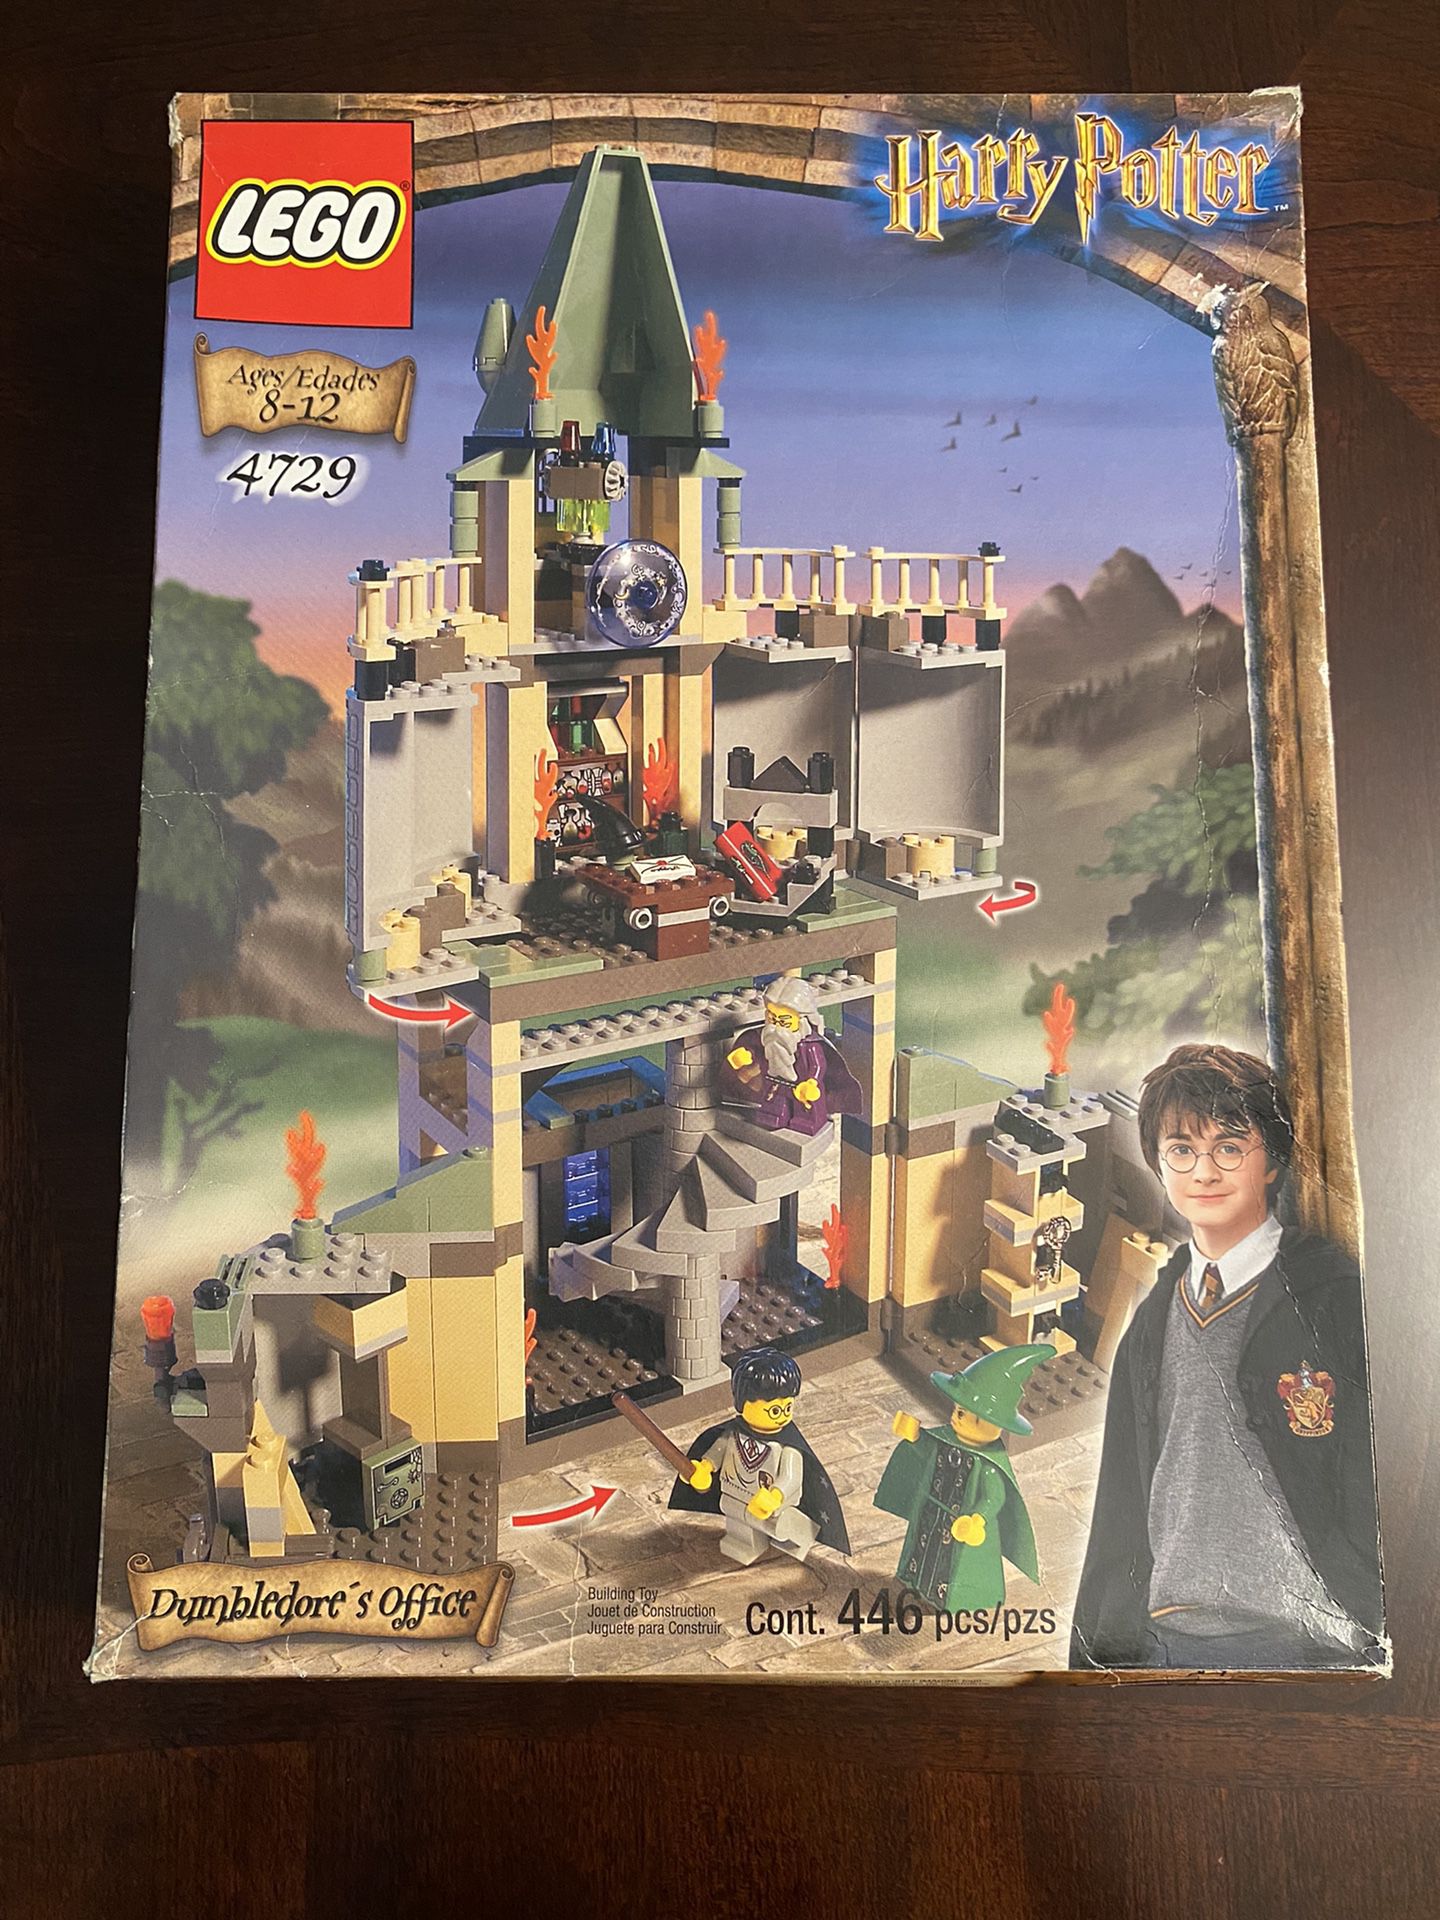 Harry Potter Lego Set - Dumbledore’s Office